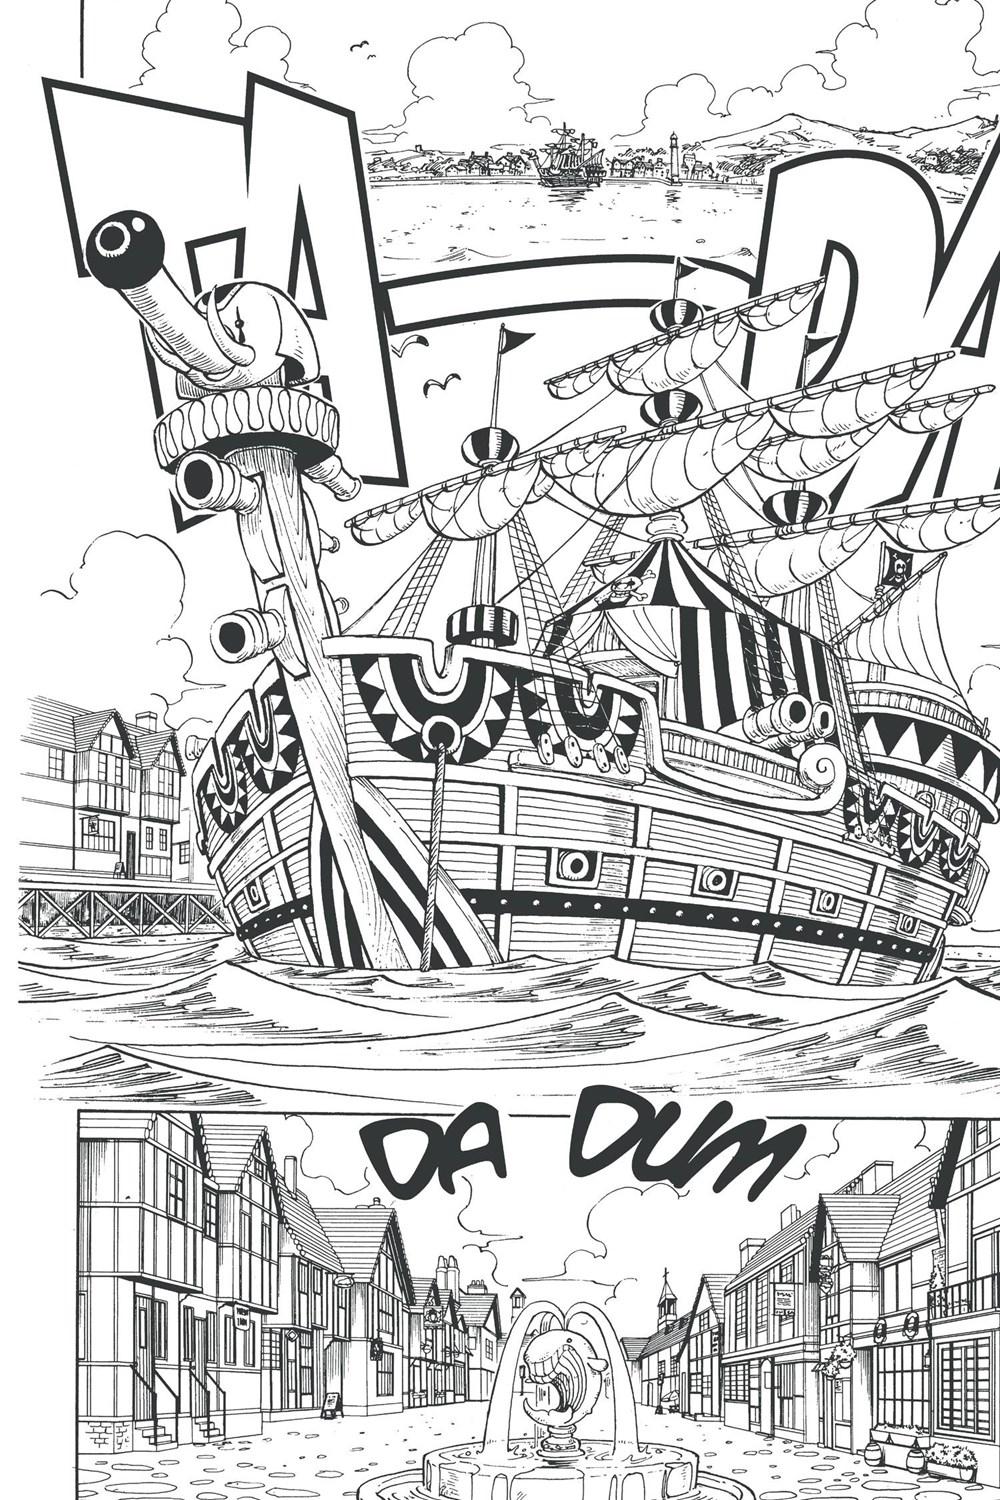 Sách - One Piece, Vol. 1 by Eiichiro Oda (US edition, paperback)